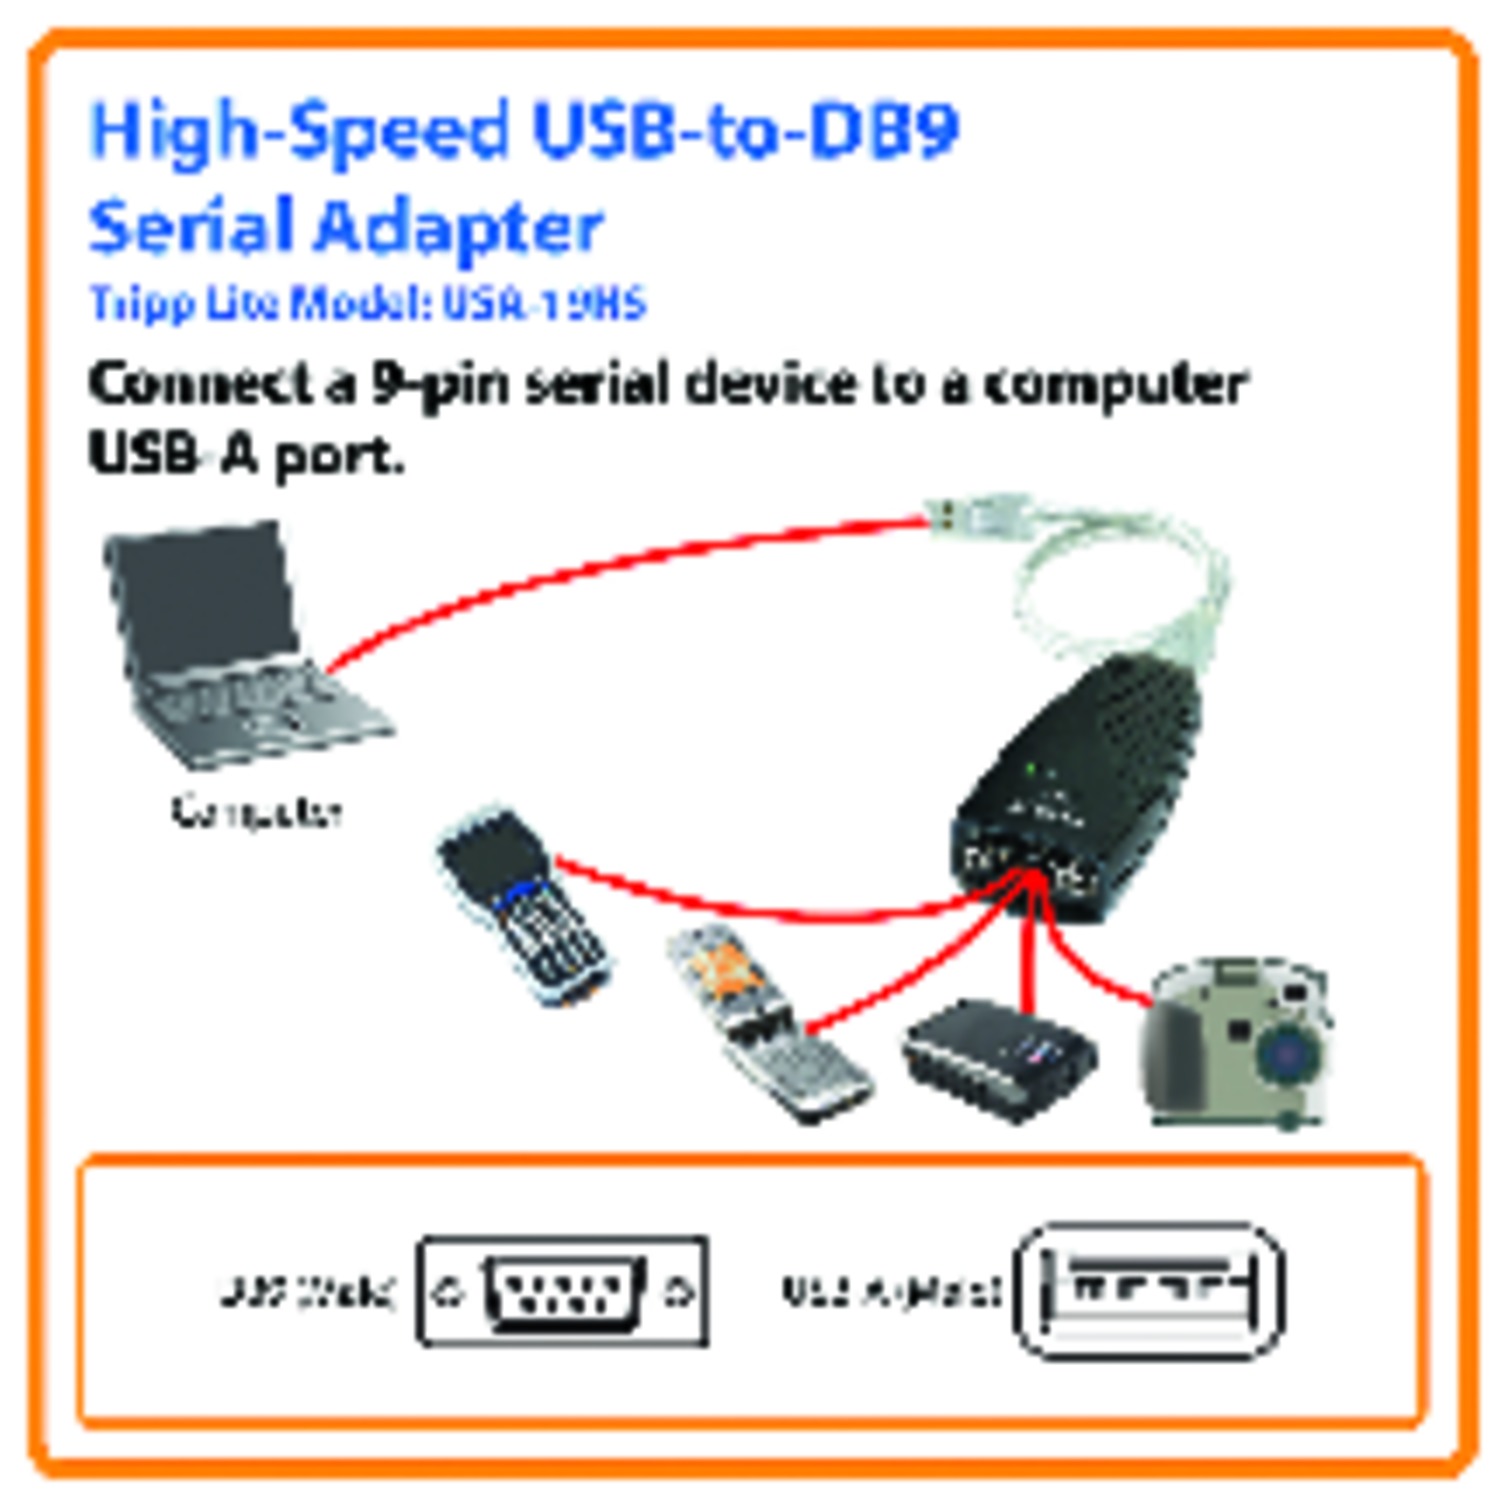 Tripp Lite Keyspan High Speed USB to Serial Adapter USA-19HS - image 2 of 4